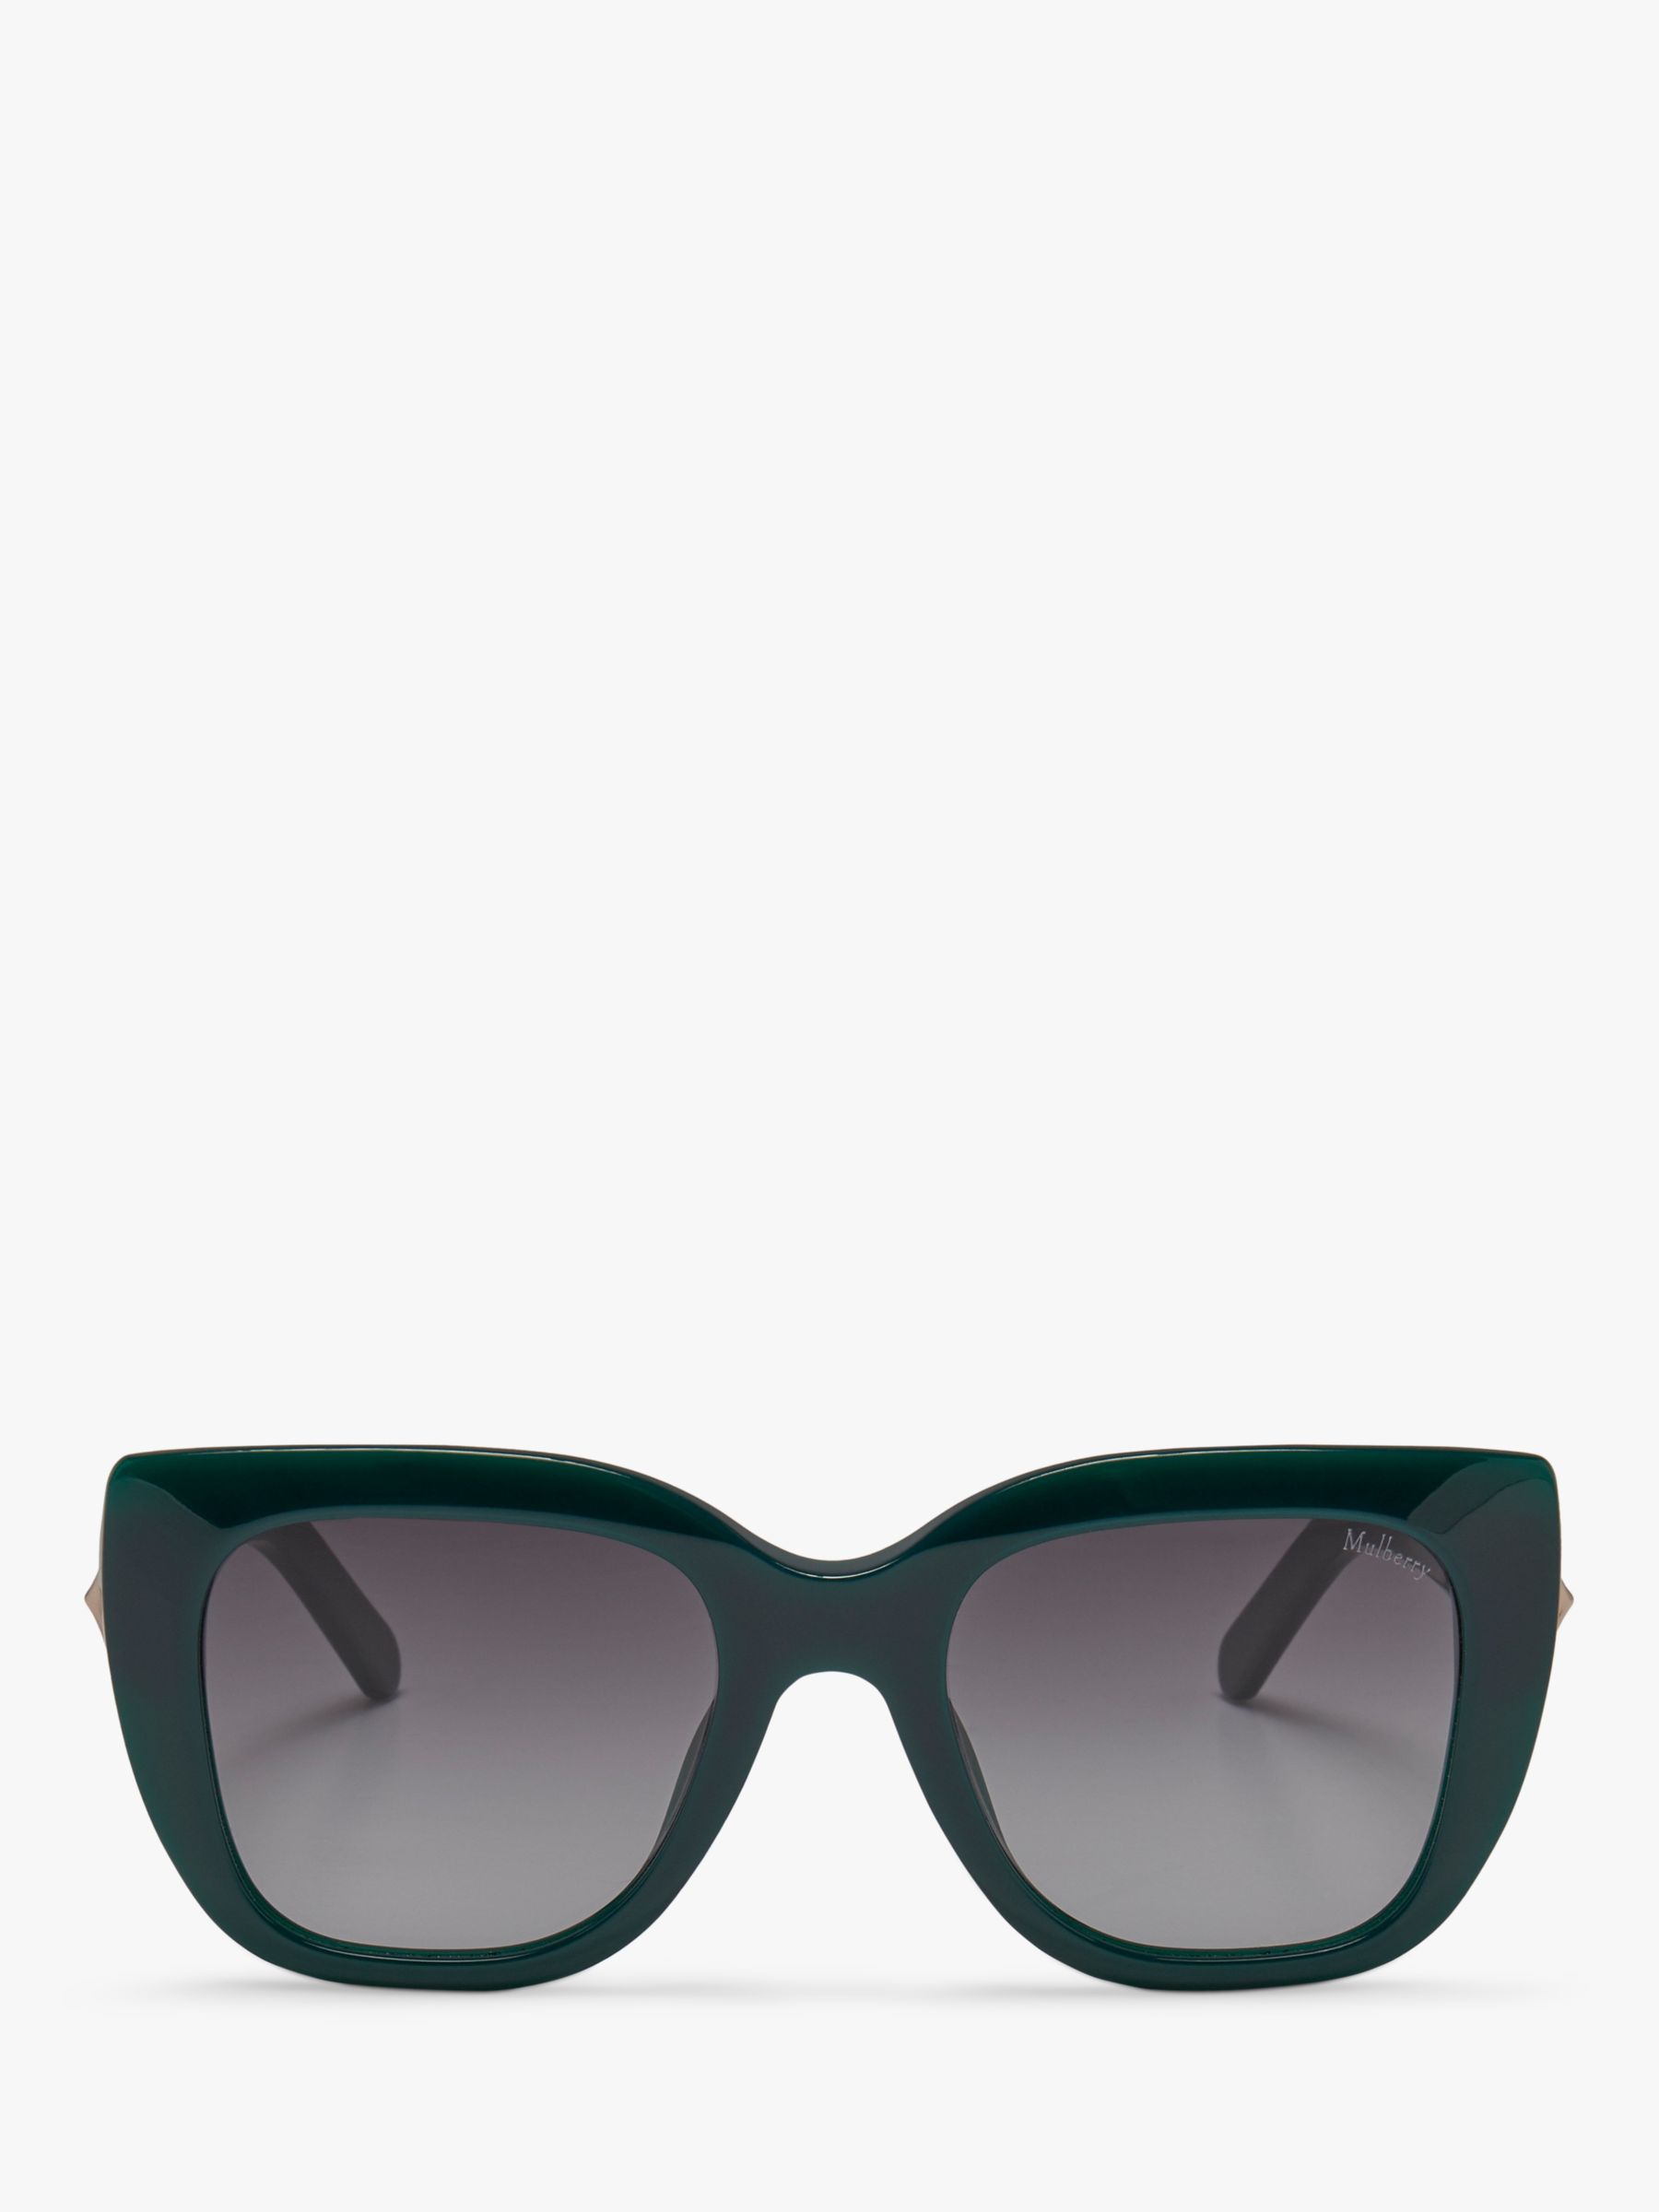 Mulberry Women's Keeley D-Frame Sunglasses, Dark Green at John Lewis ...